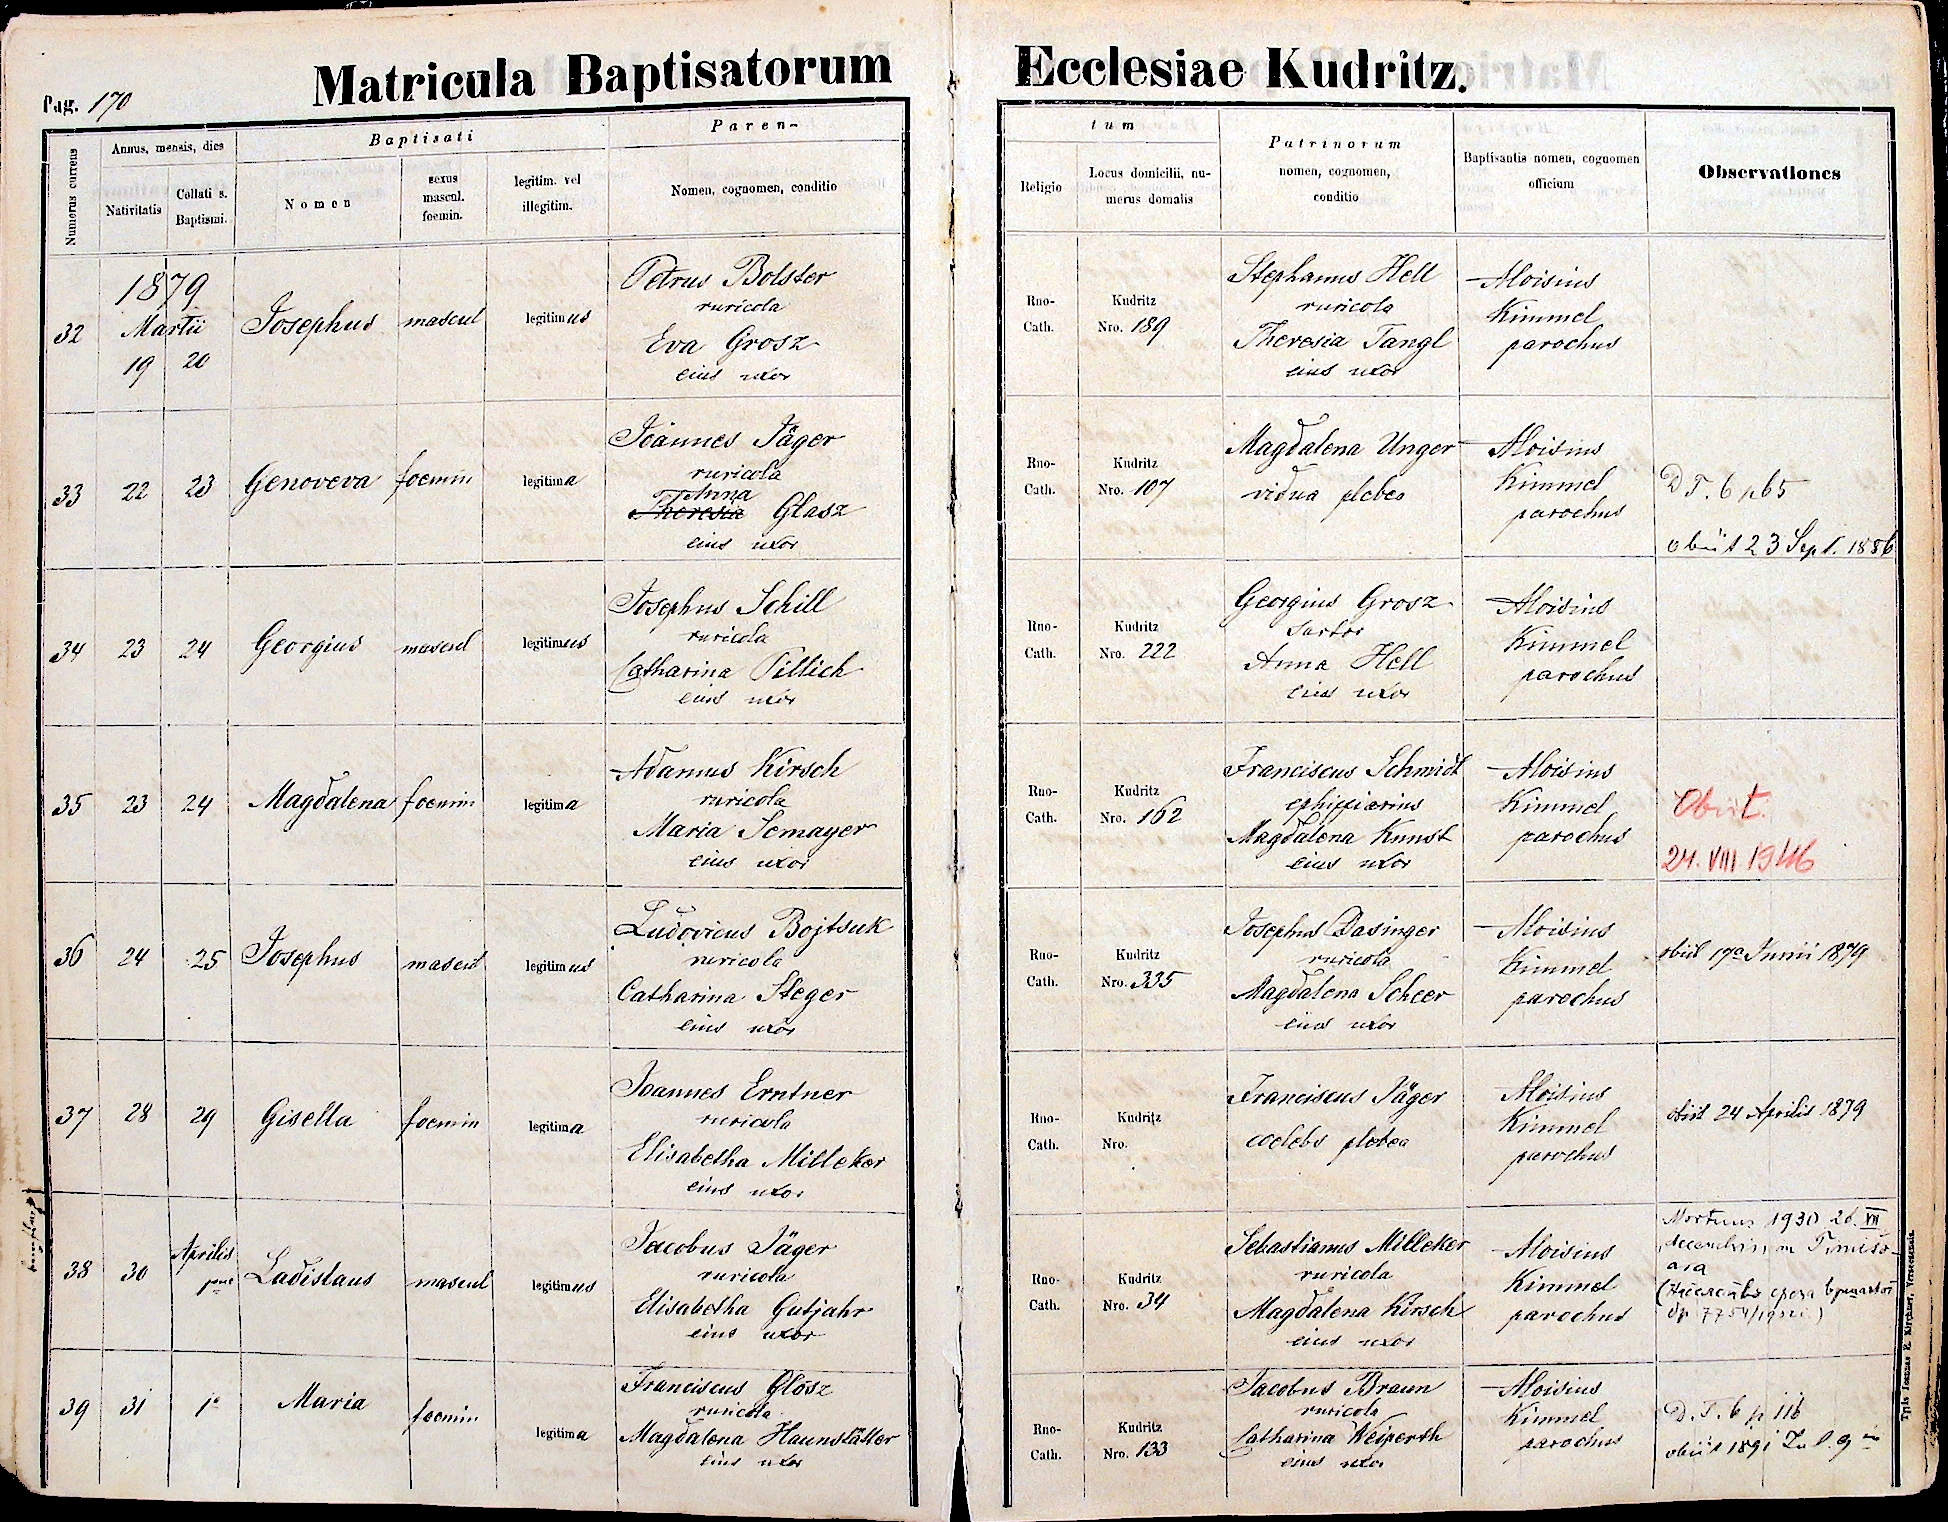 images/church_records/BIRTHS/1884-1899B/1895/170